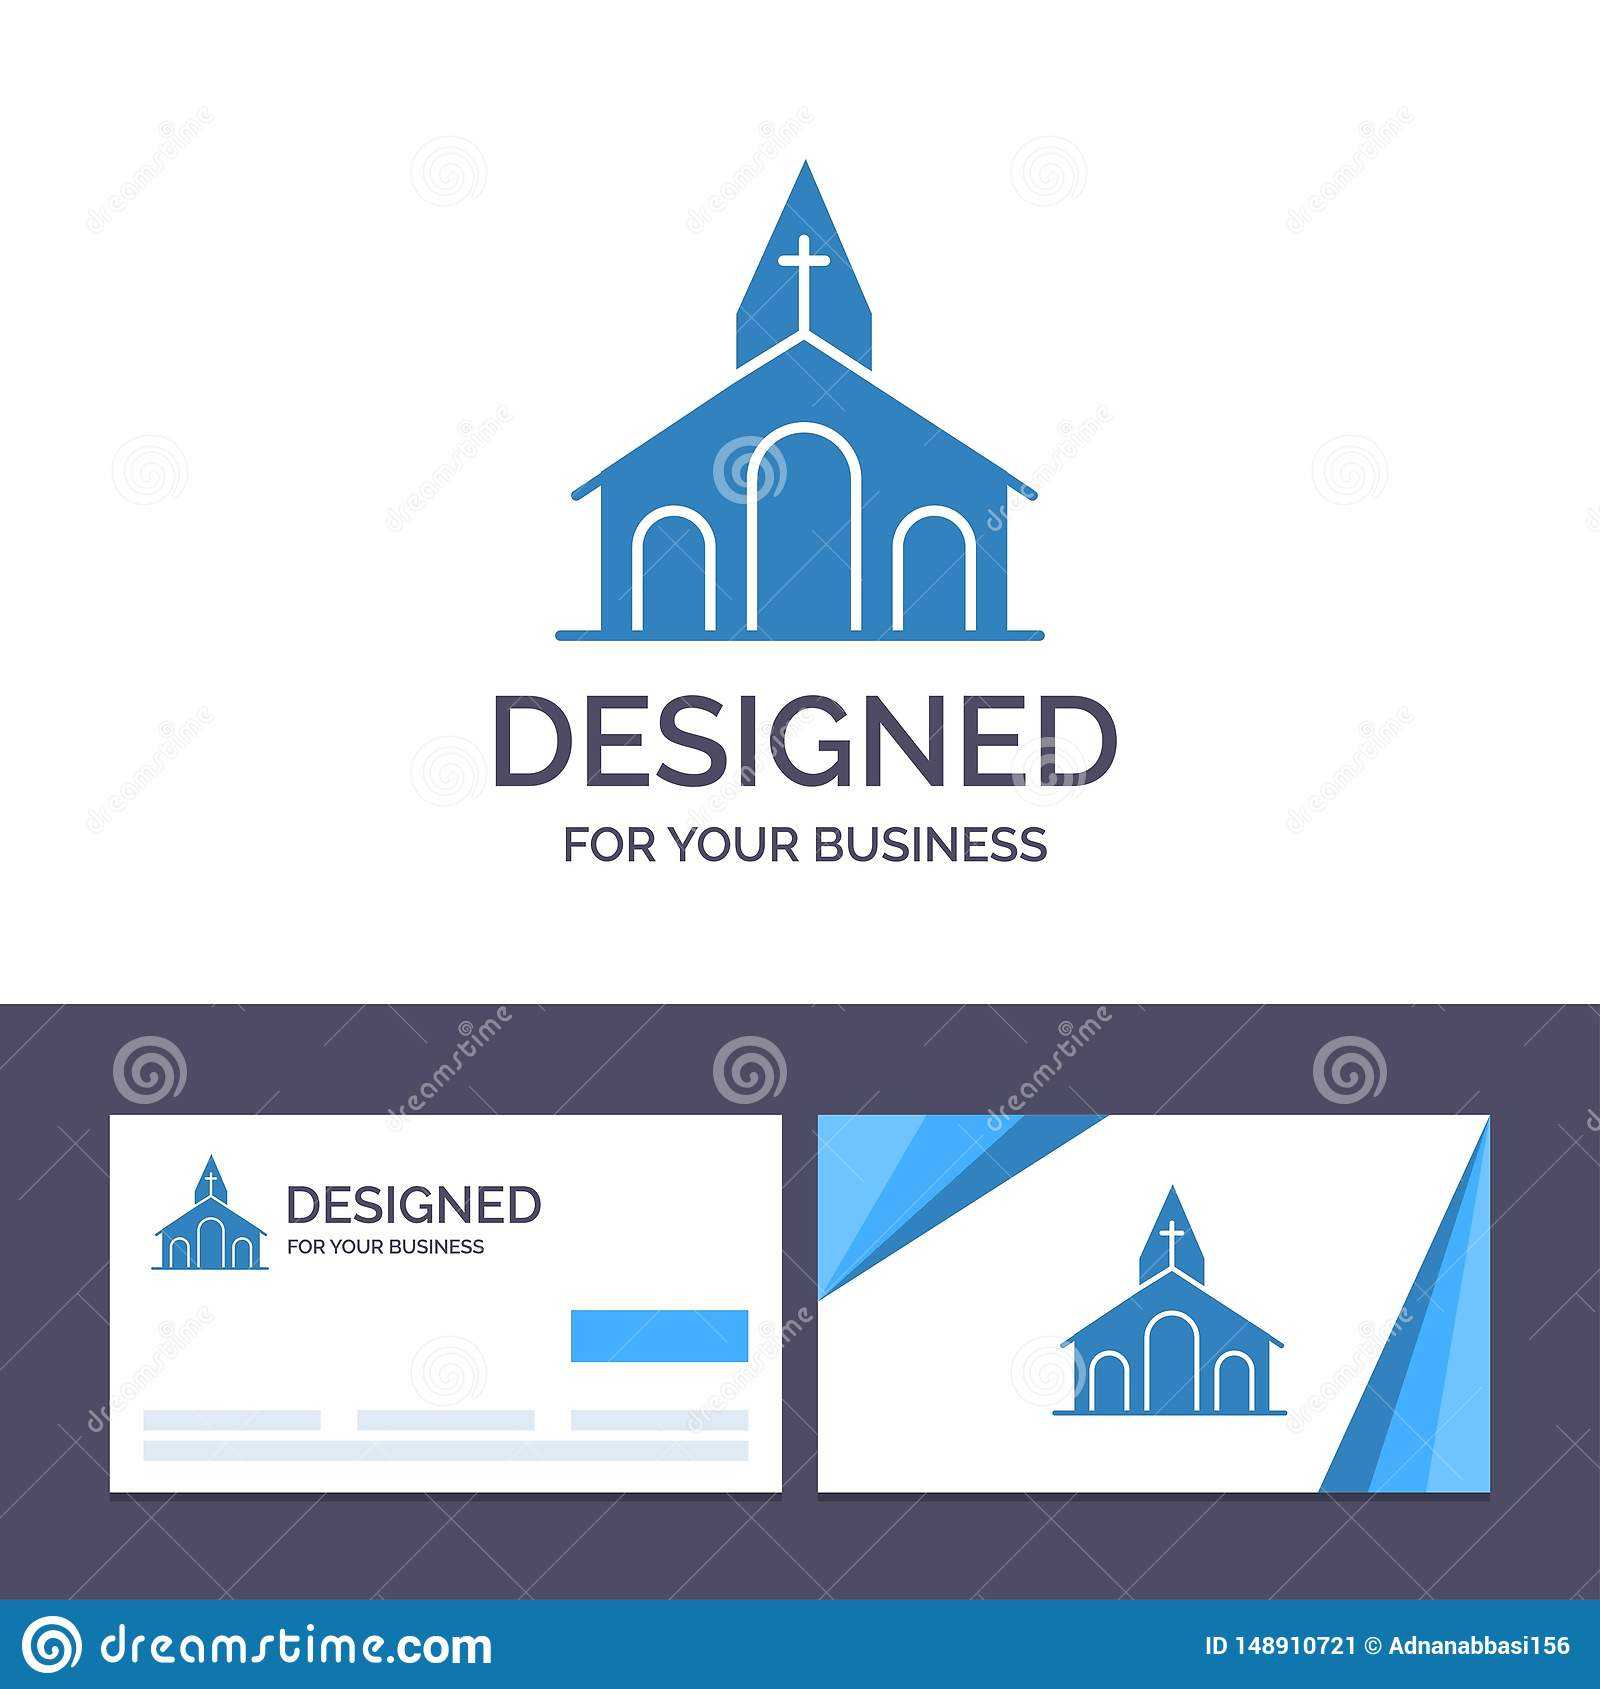 Creative Business Card And Logo Template Church, Celebration Regarding Christian Business Cards Templates Free